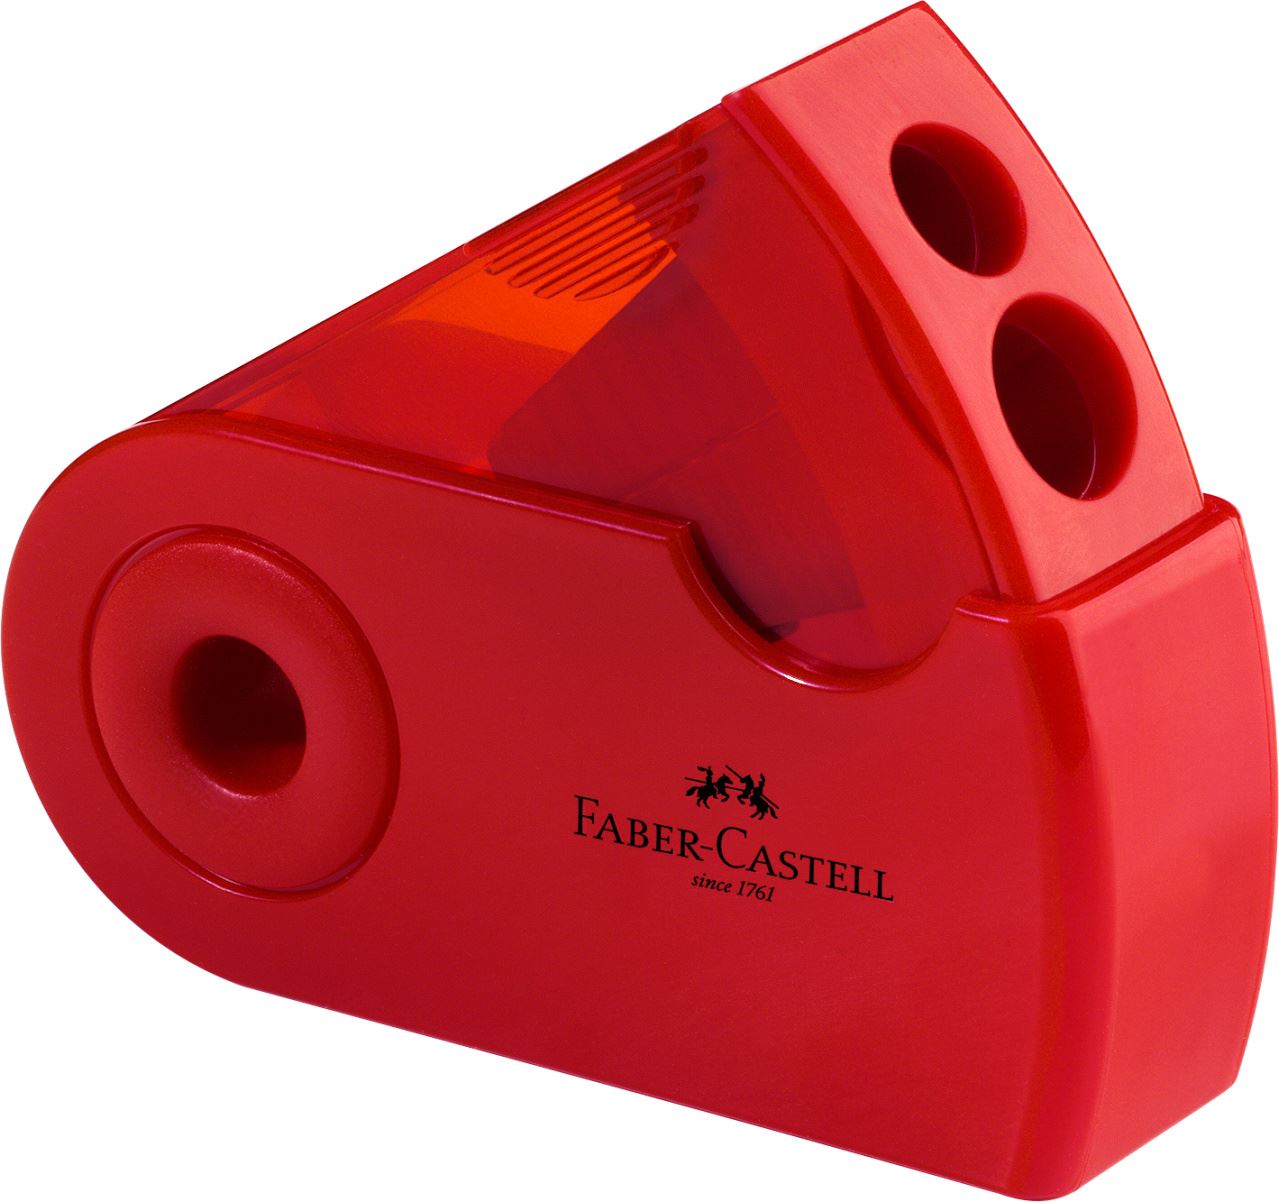 Faber-Castell - Sleeve Doppelspitzdose, rot/blau, sortiert